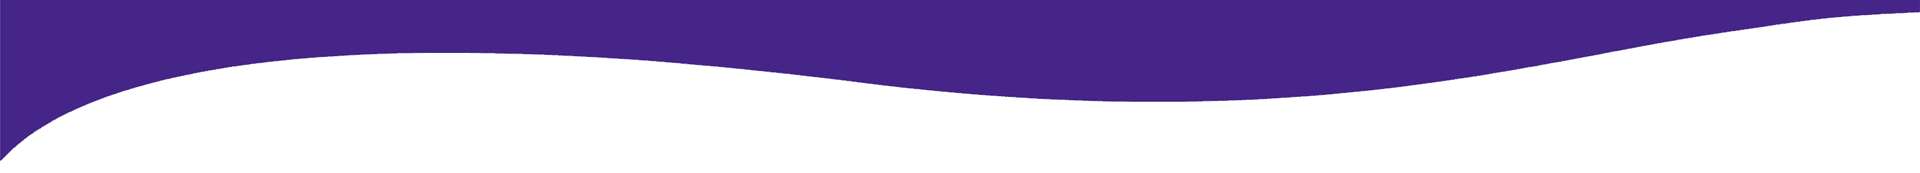 curve bottom purple white